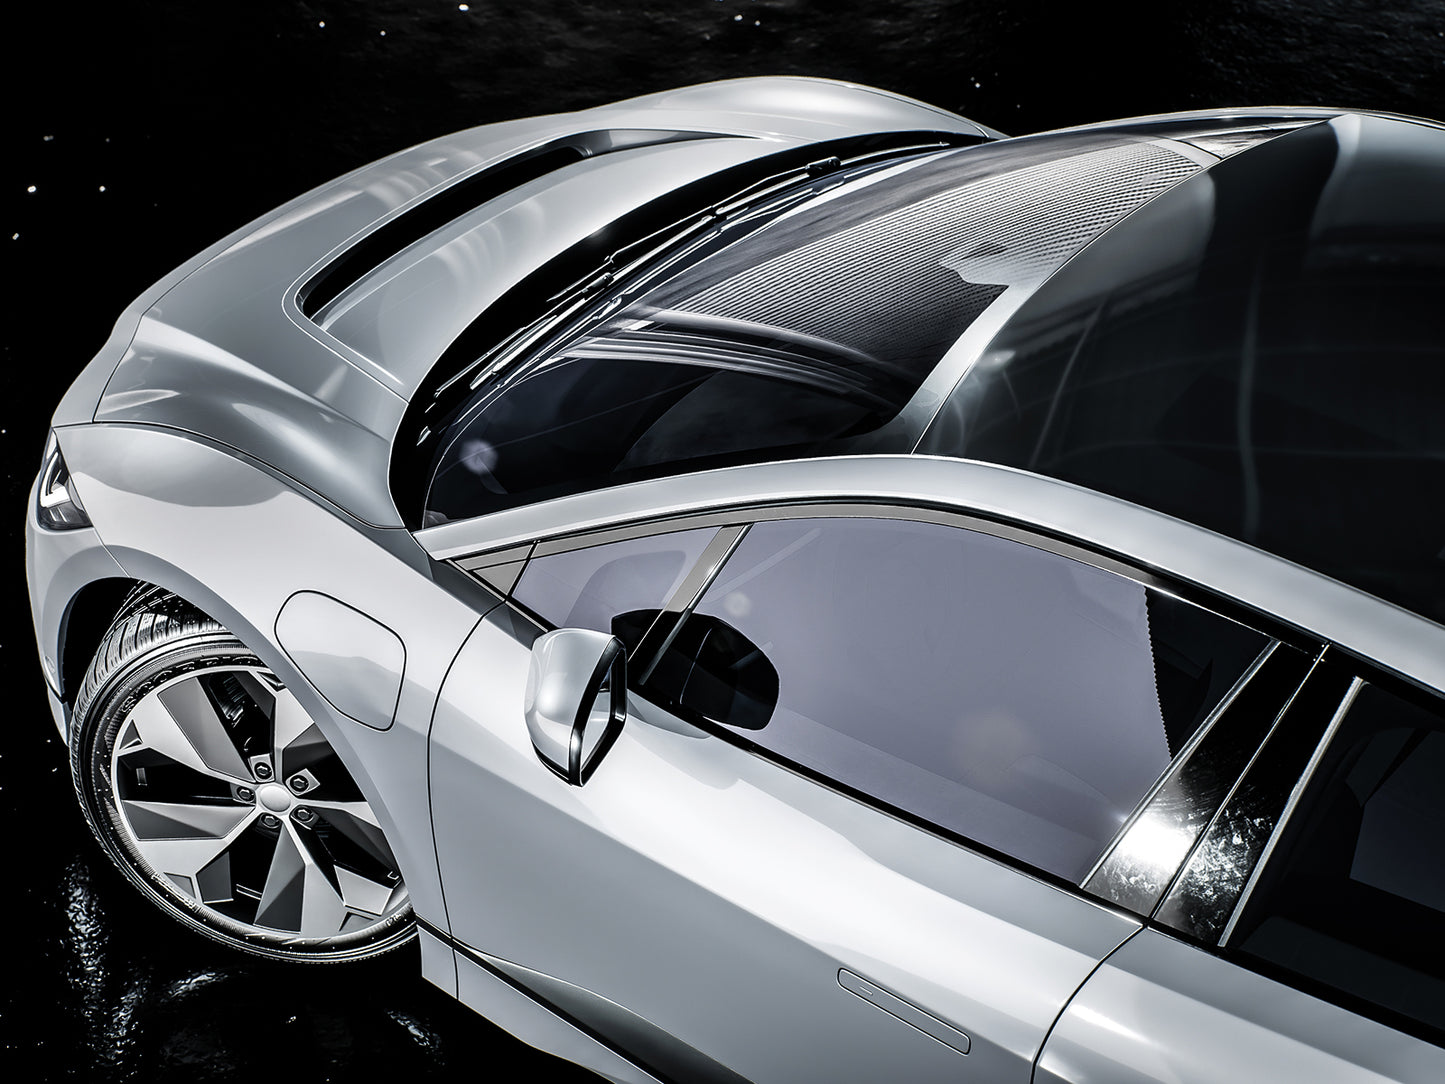 Prim-planul unei masini sport argintii care isi arata designul elegant si rotile stralucitoare, cu un cer intunecat si instelat in fundal.